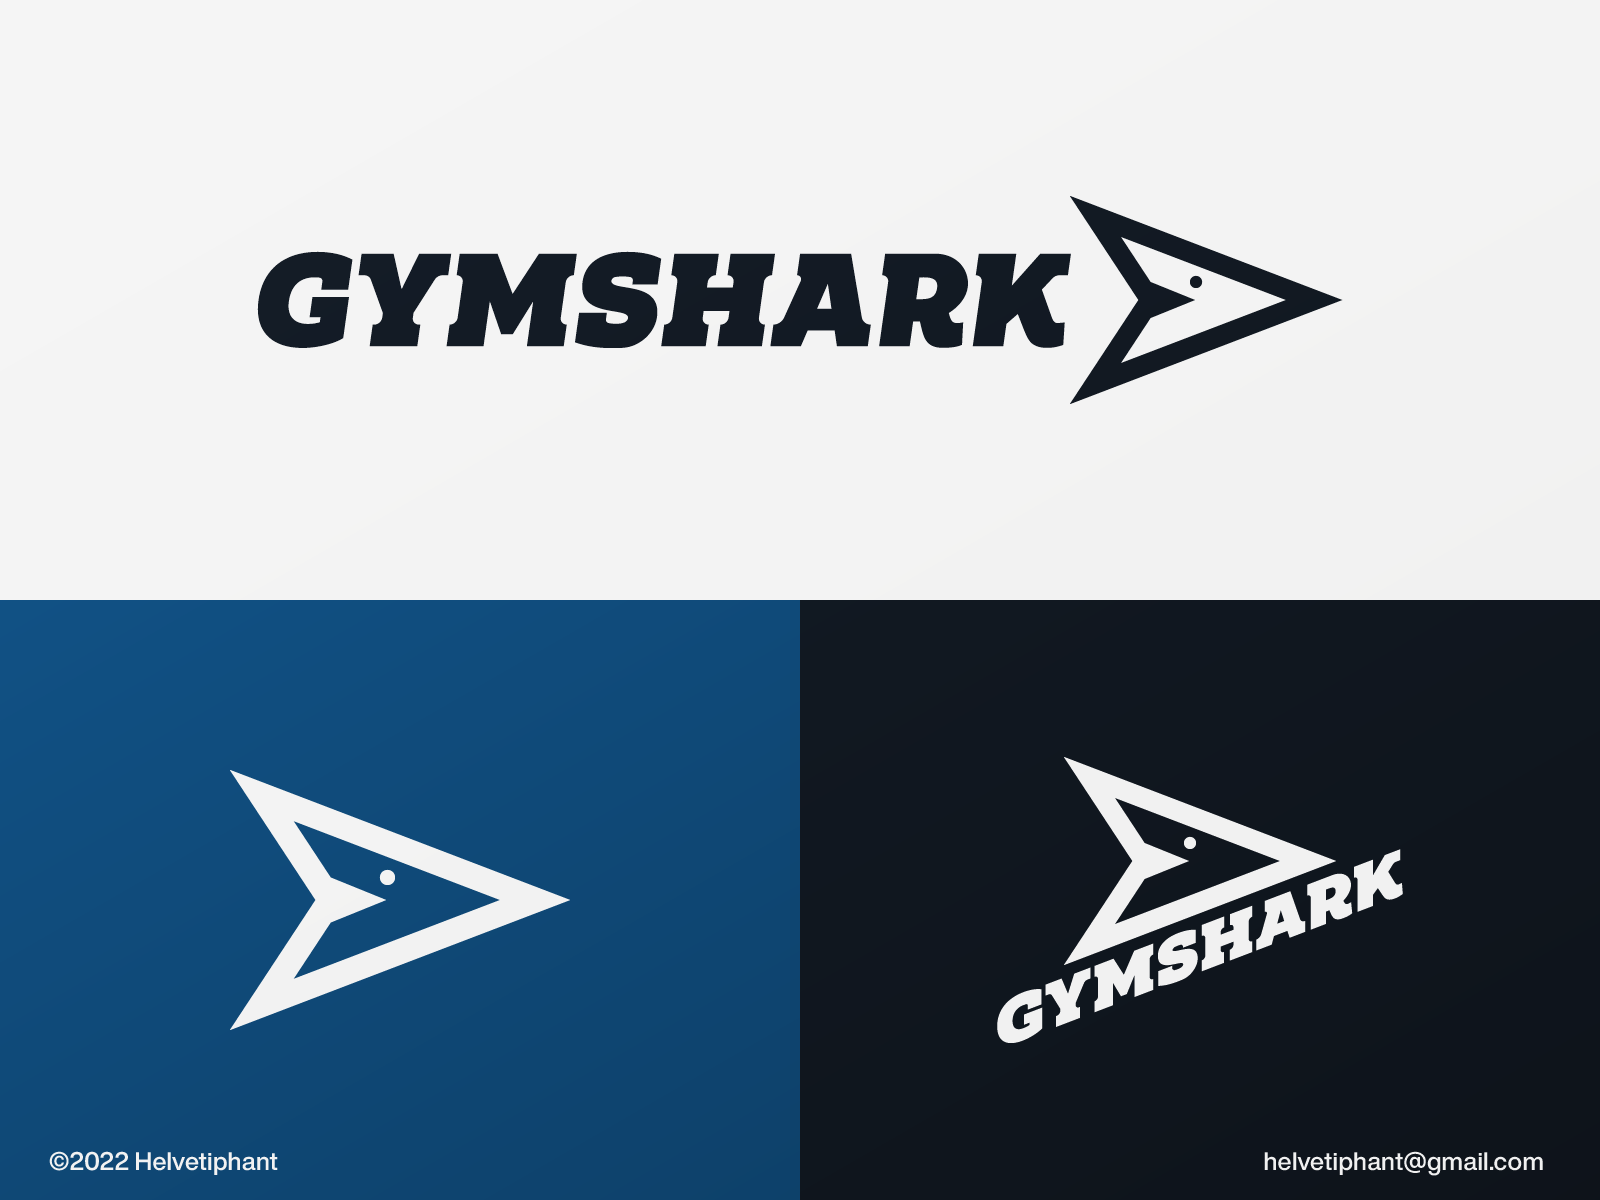 Gymshark - logo concept by Helvetiphant™ on Dribbble